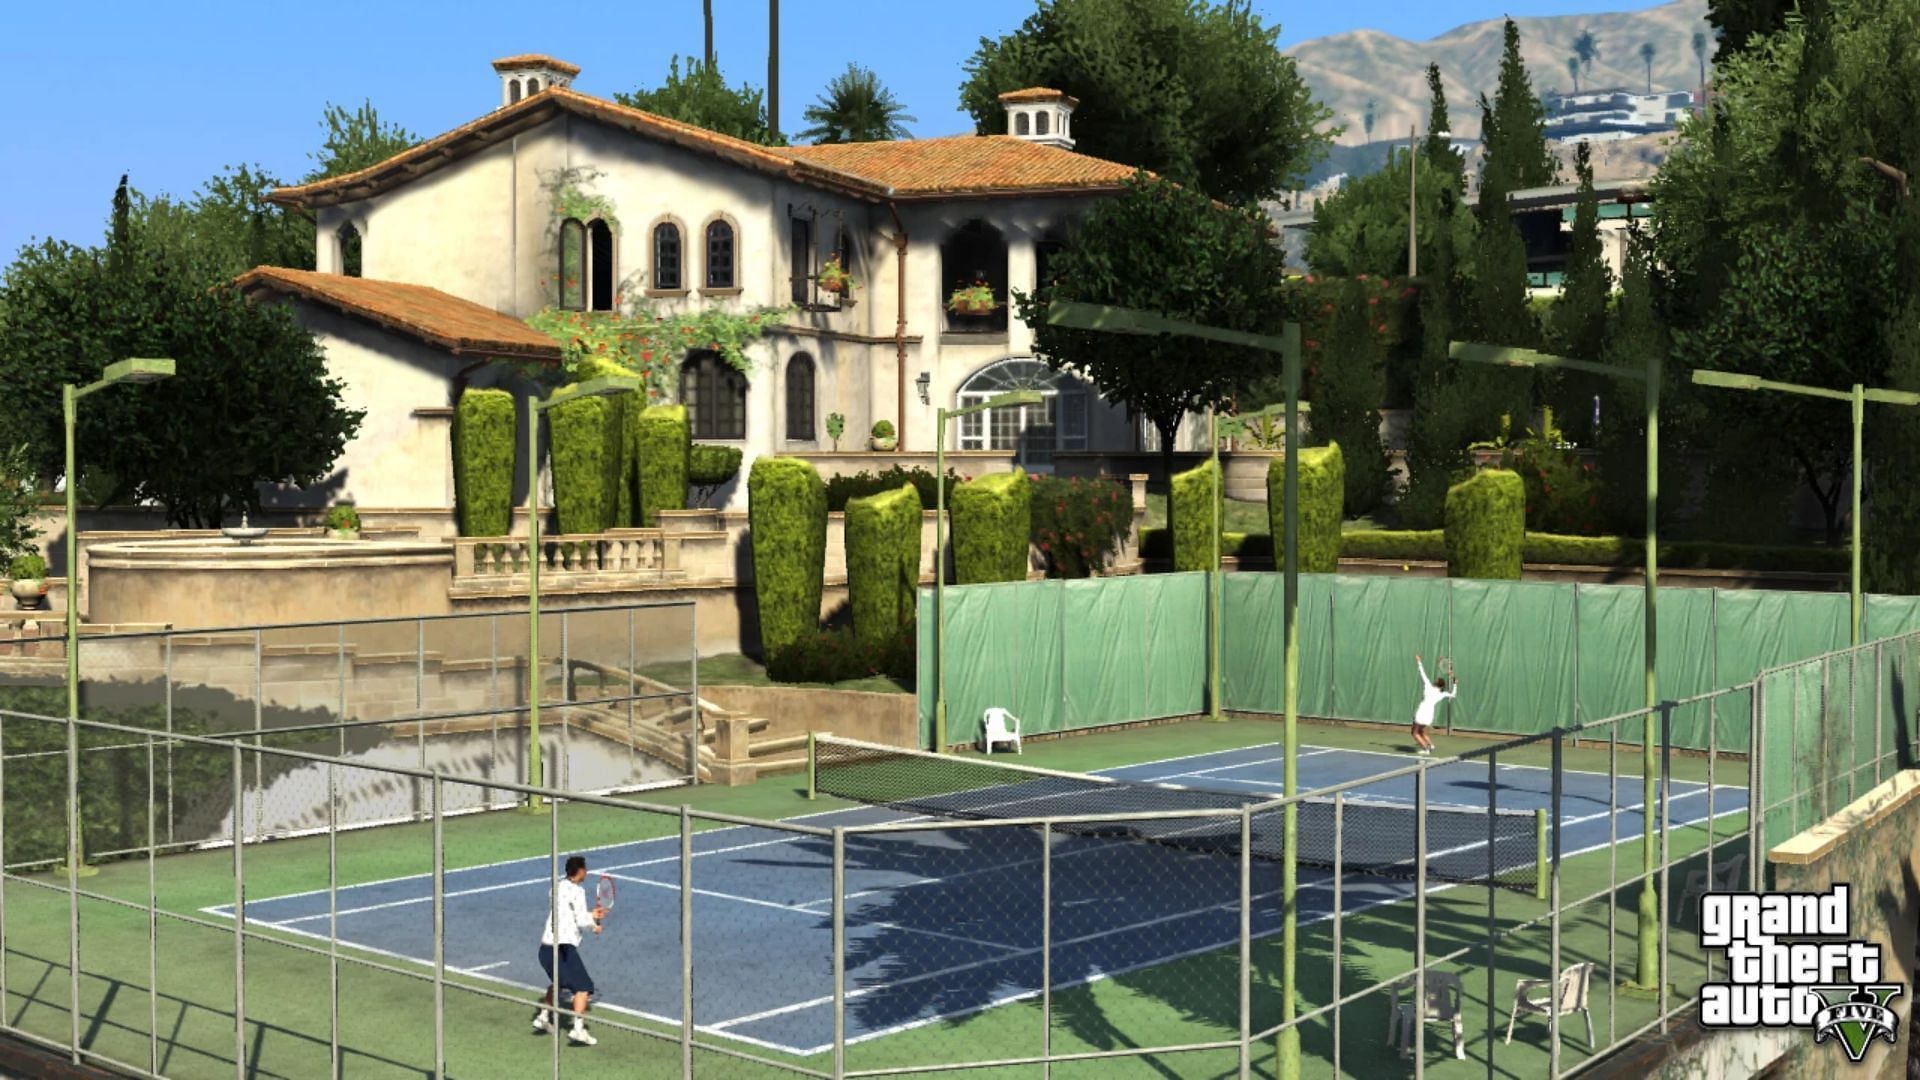 One of the earliest GTA 5 screenshots that showed the tennis activity (Image via Rockstar Games)